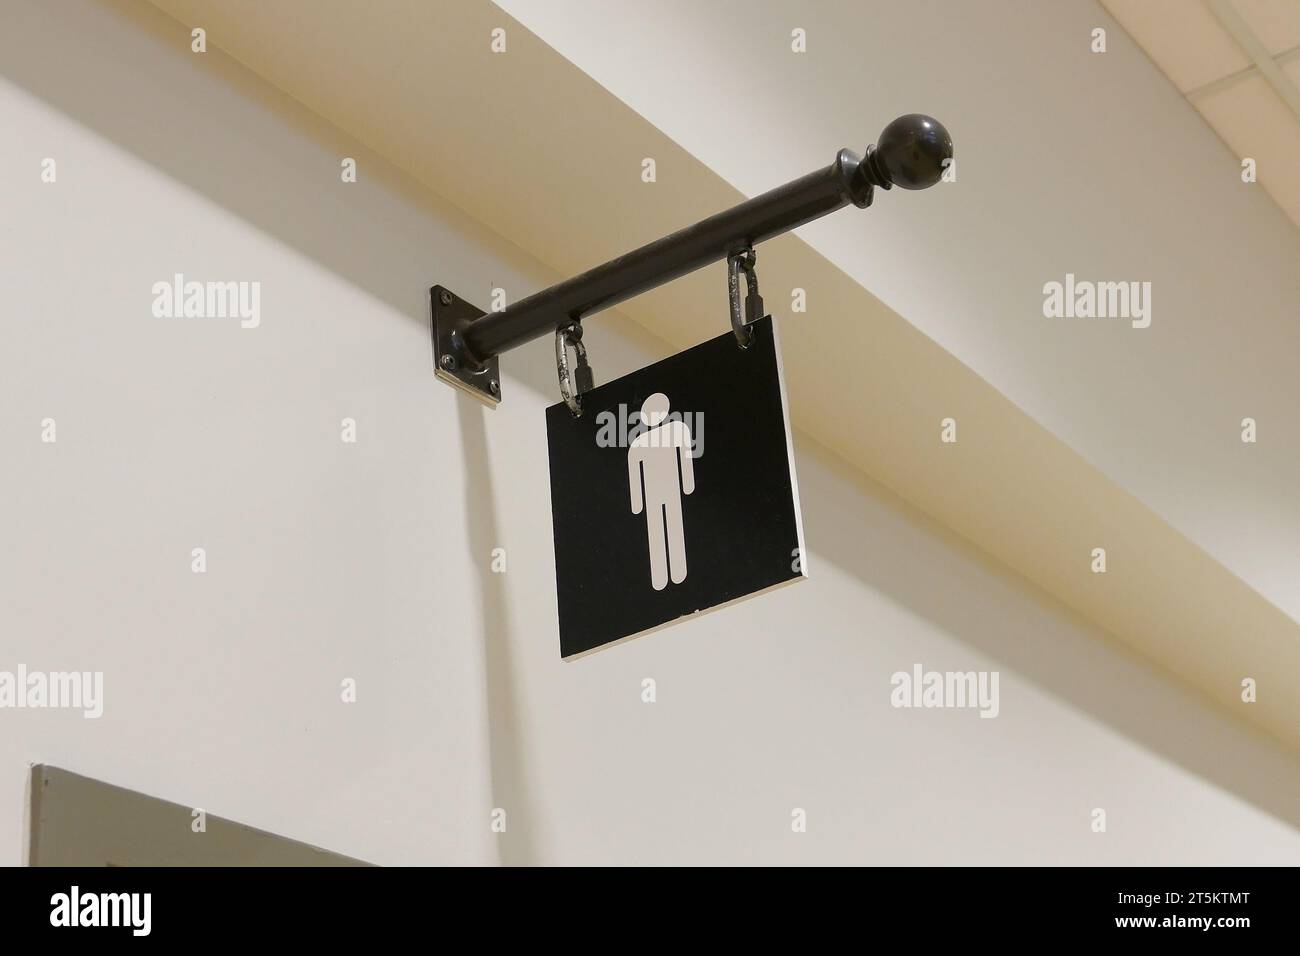 A man washroom logo on the wall Stock Photo